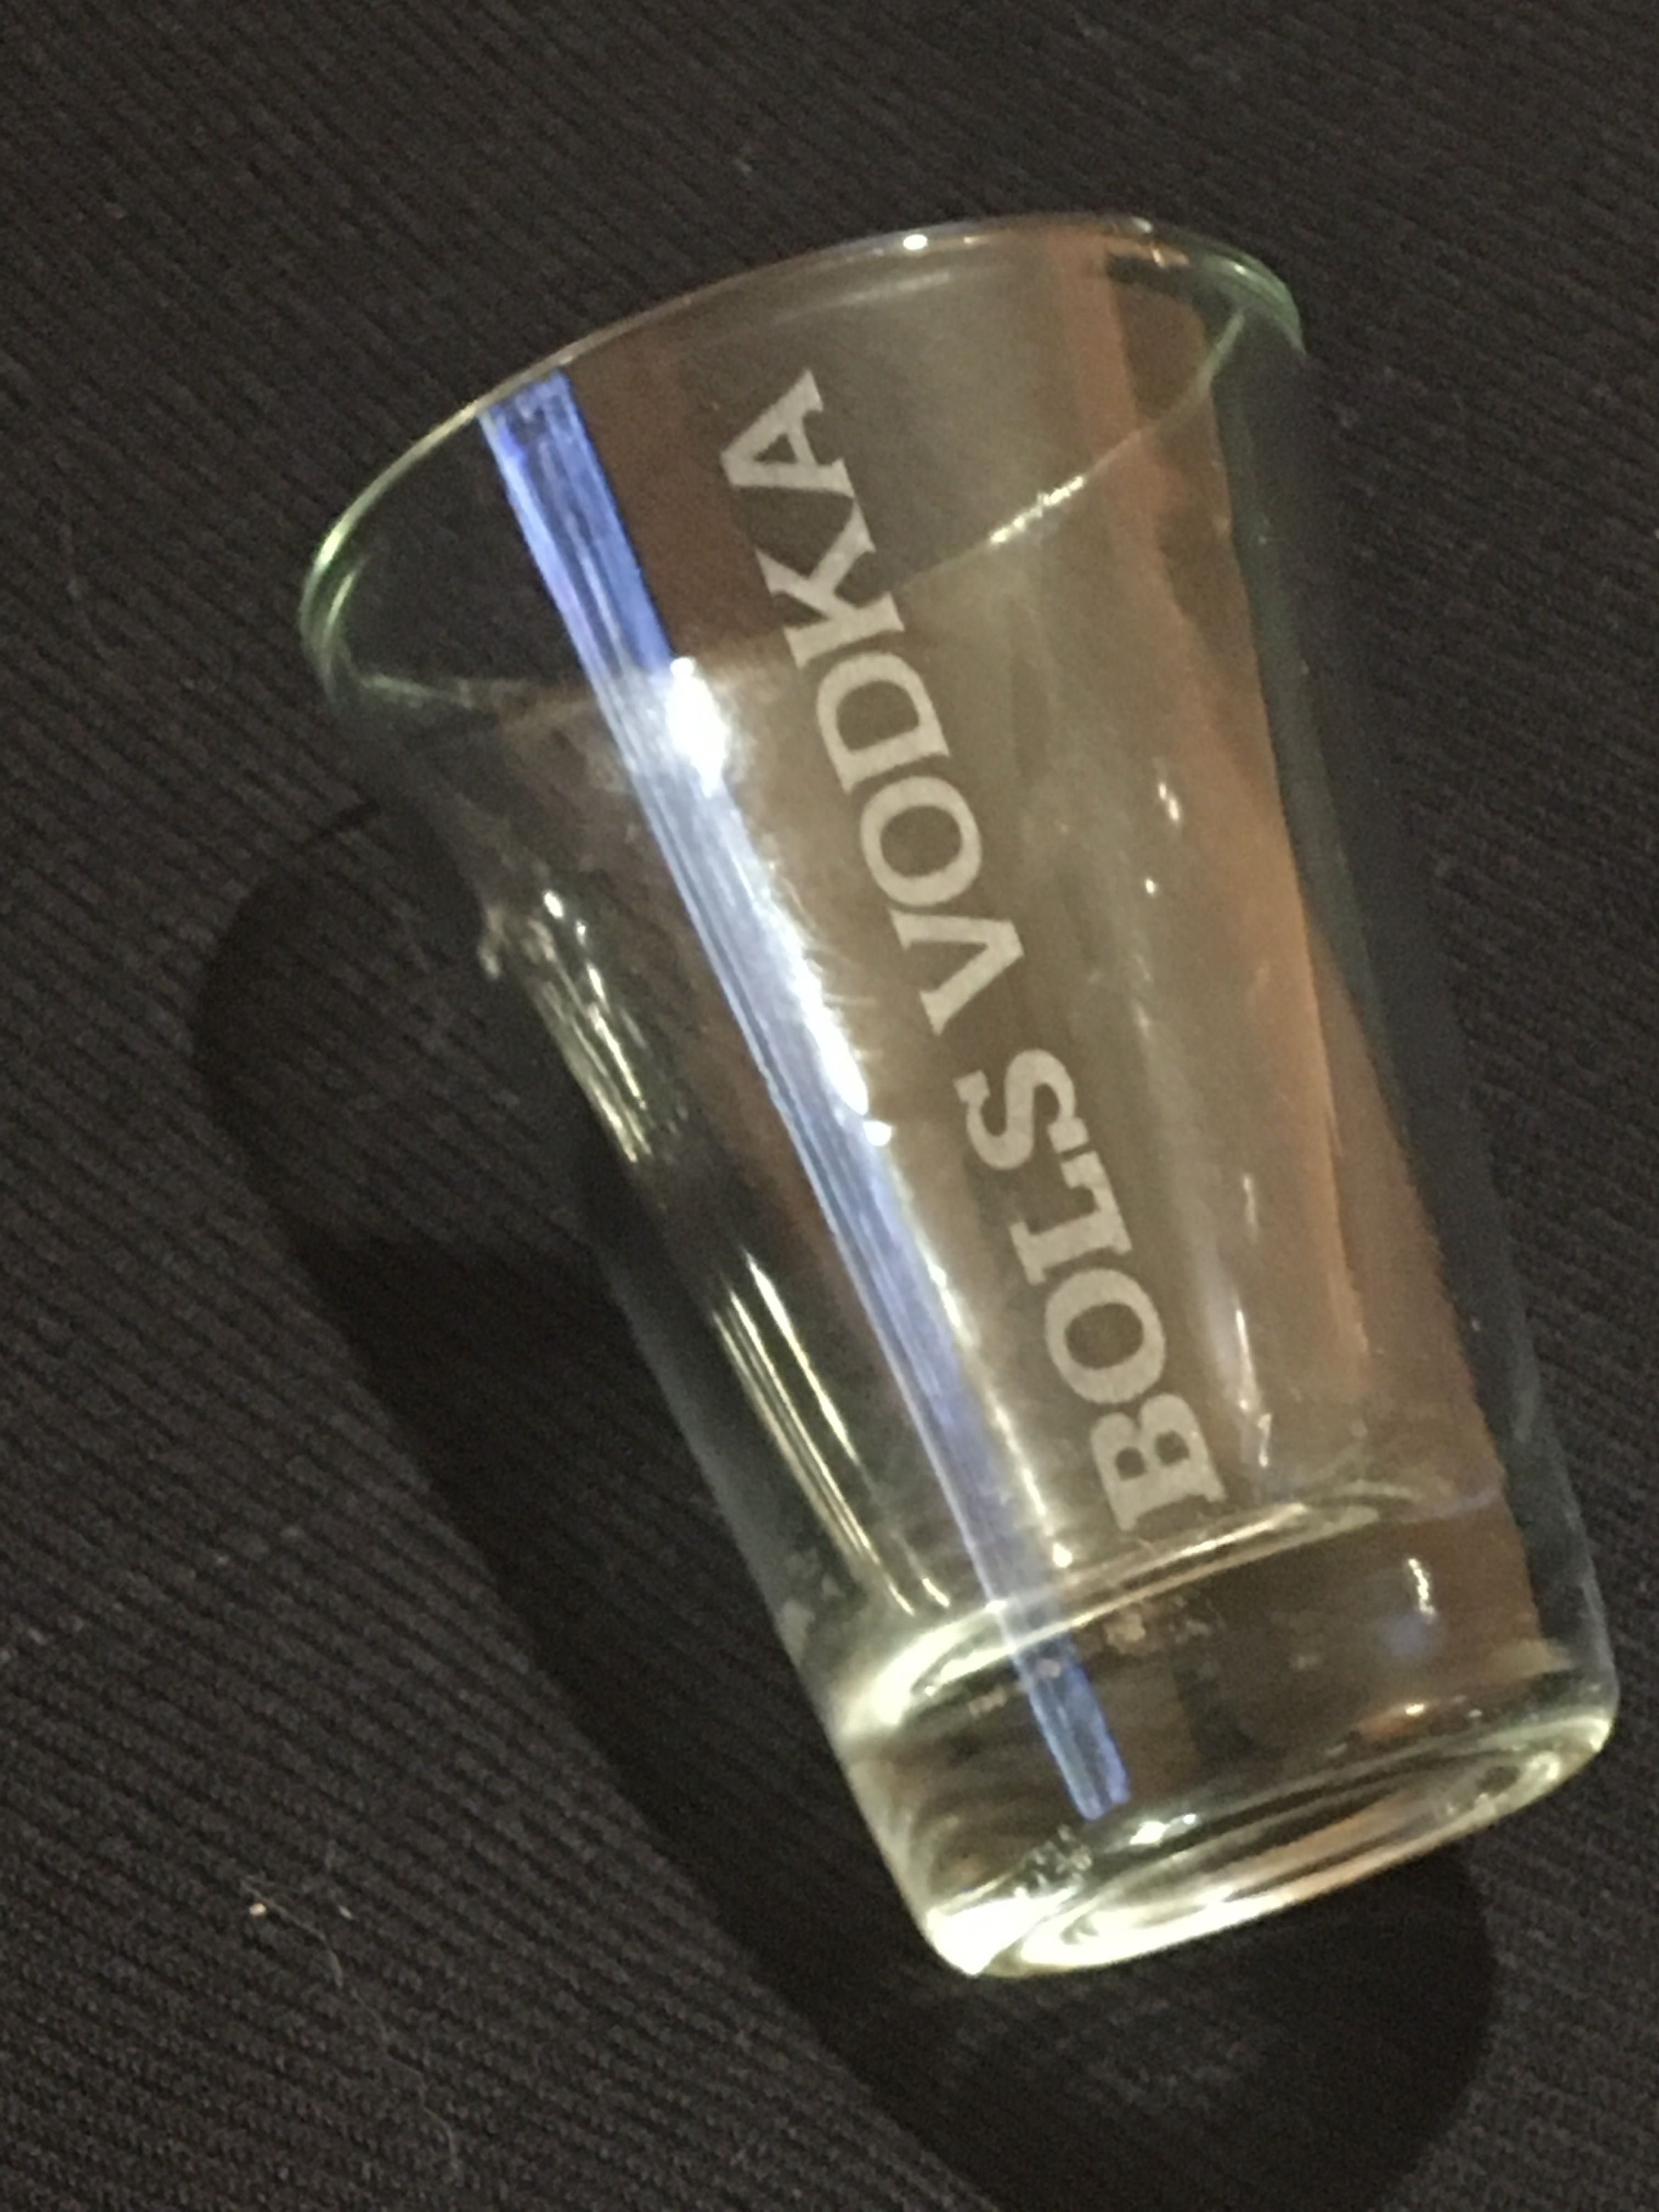 Bols vodka, kieliszek z logo